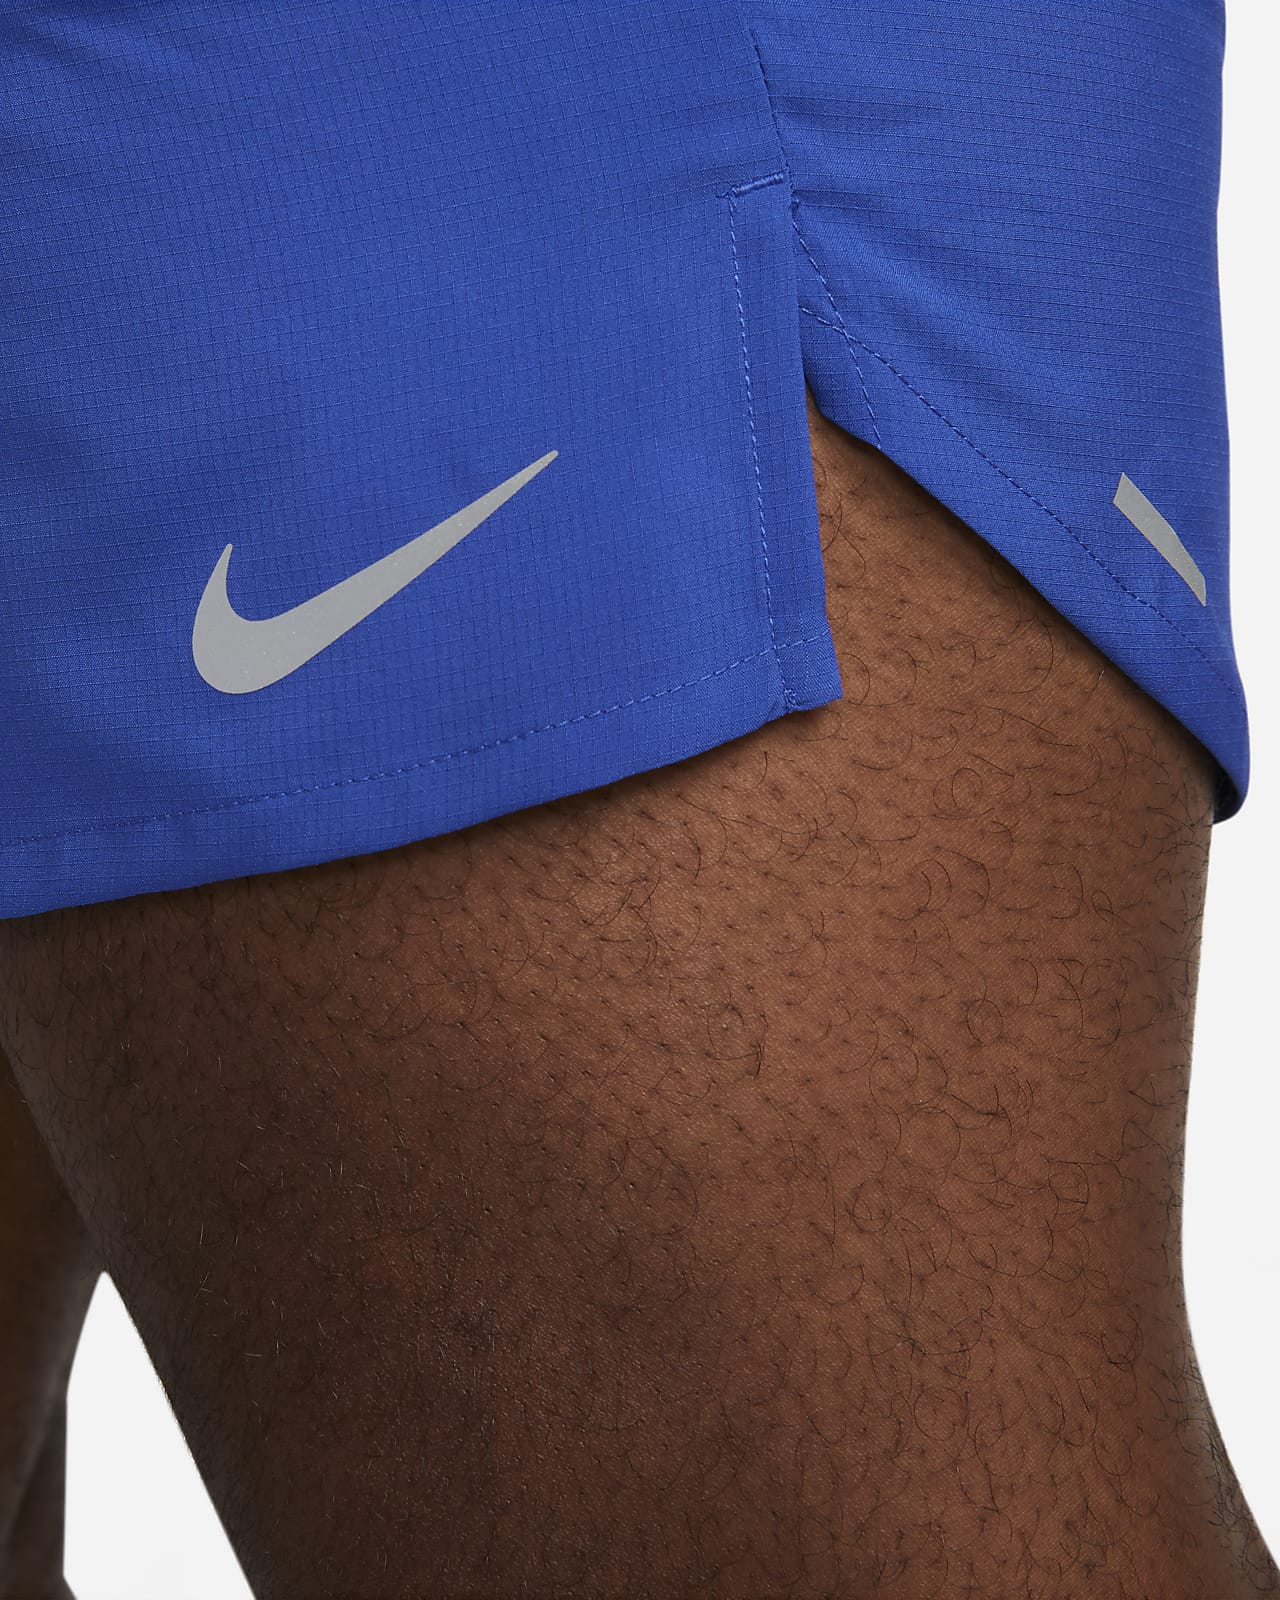 Nike Performance STRIDE - Sports shorts - black 